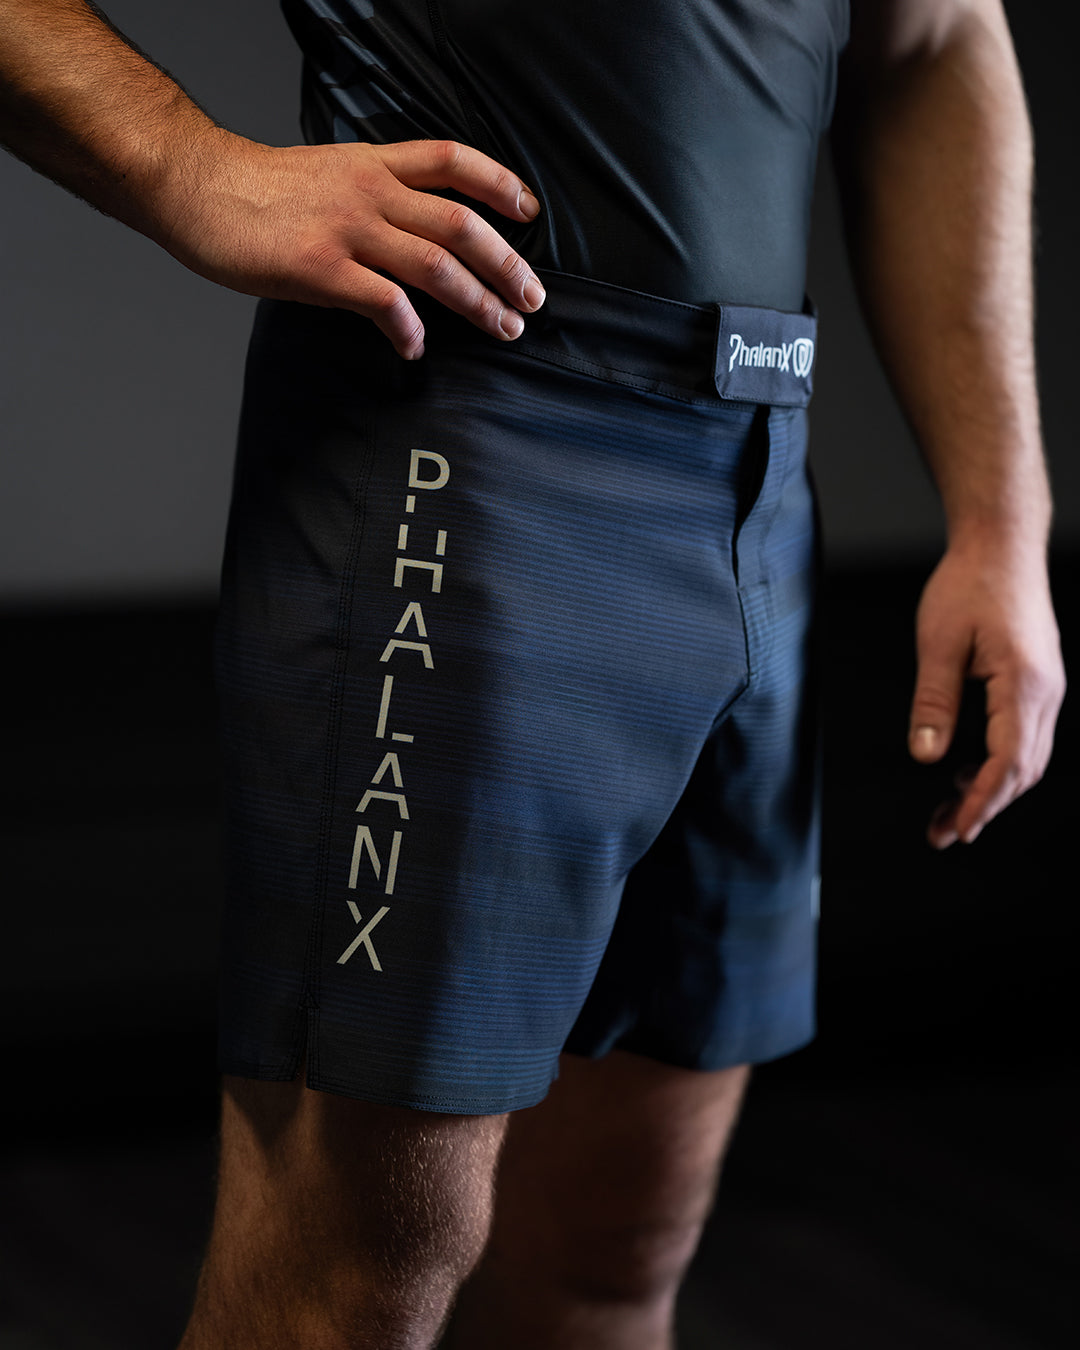 Phalanx jiu jitsu fight shorts for BJJ and MMA, perfect for No Gi Jiu Jitsu or Brazilian Jiu-Jitsu and Mixed Martial Arts - all grappling and wrestling plus surfing and yoga!